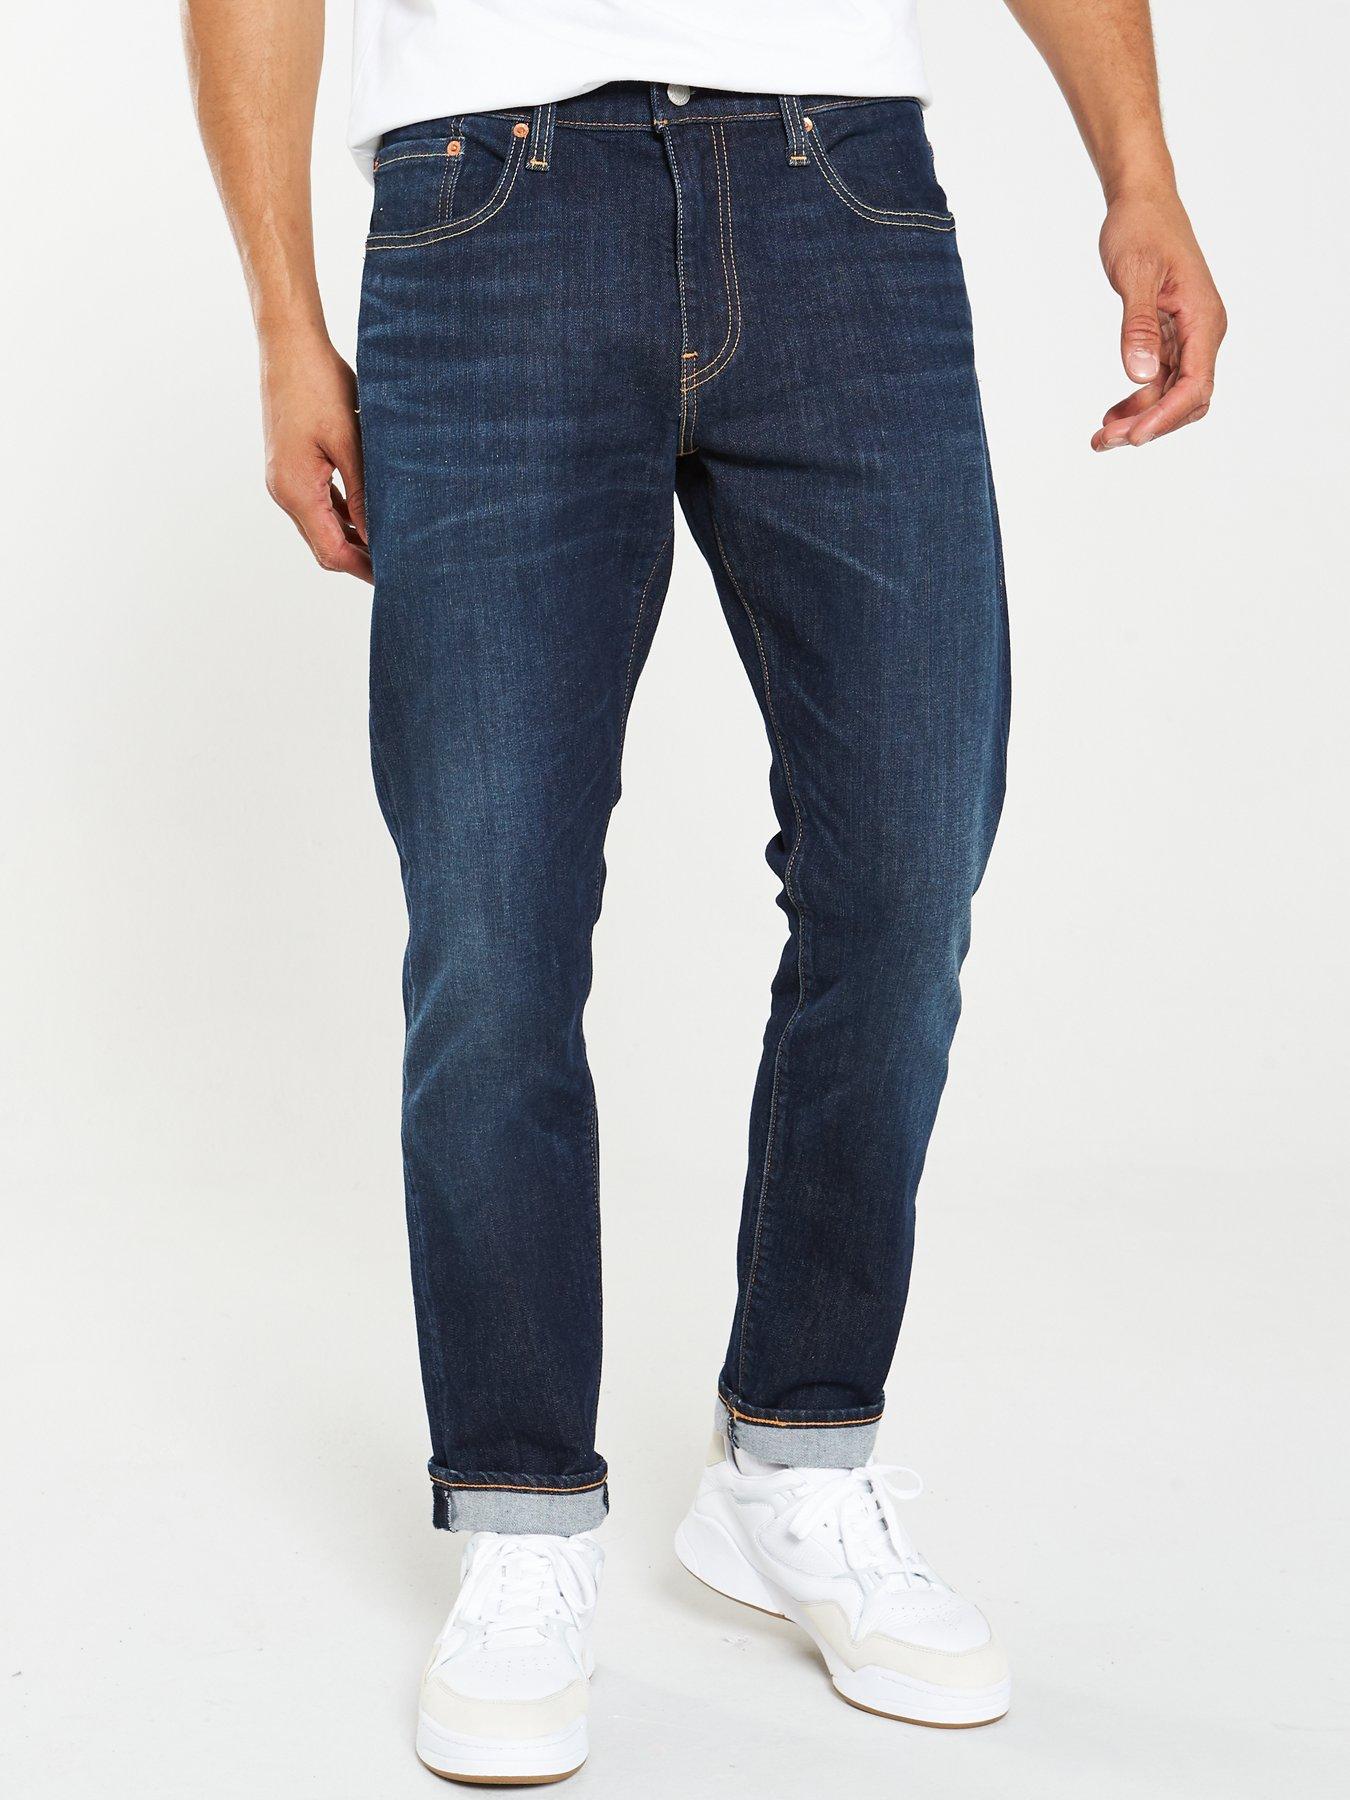 levis jeans ireland